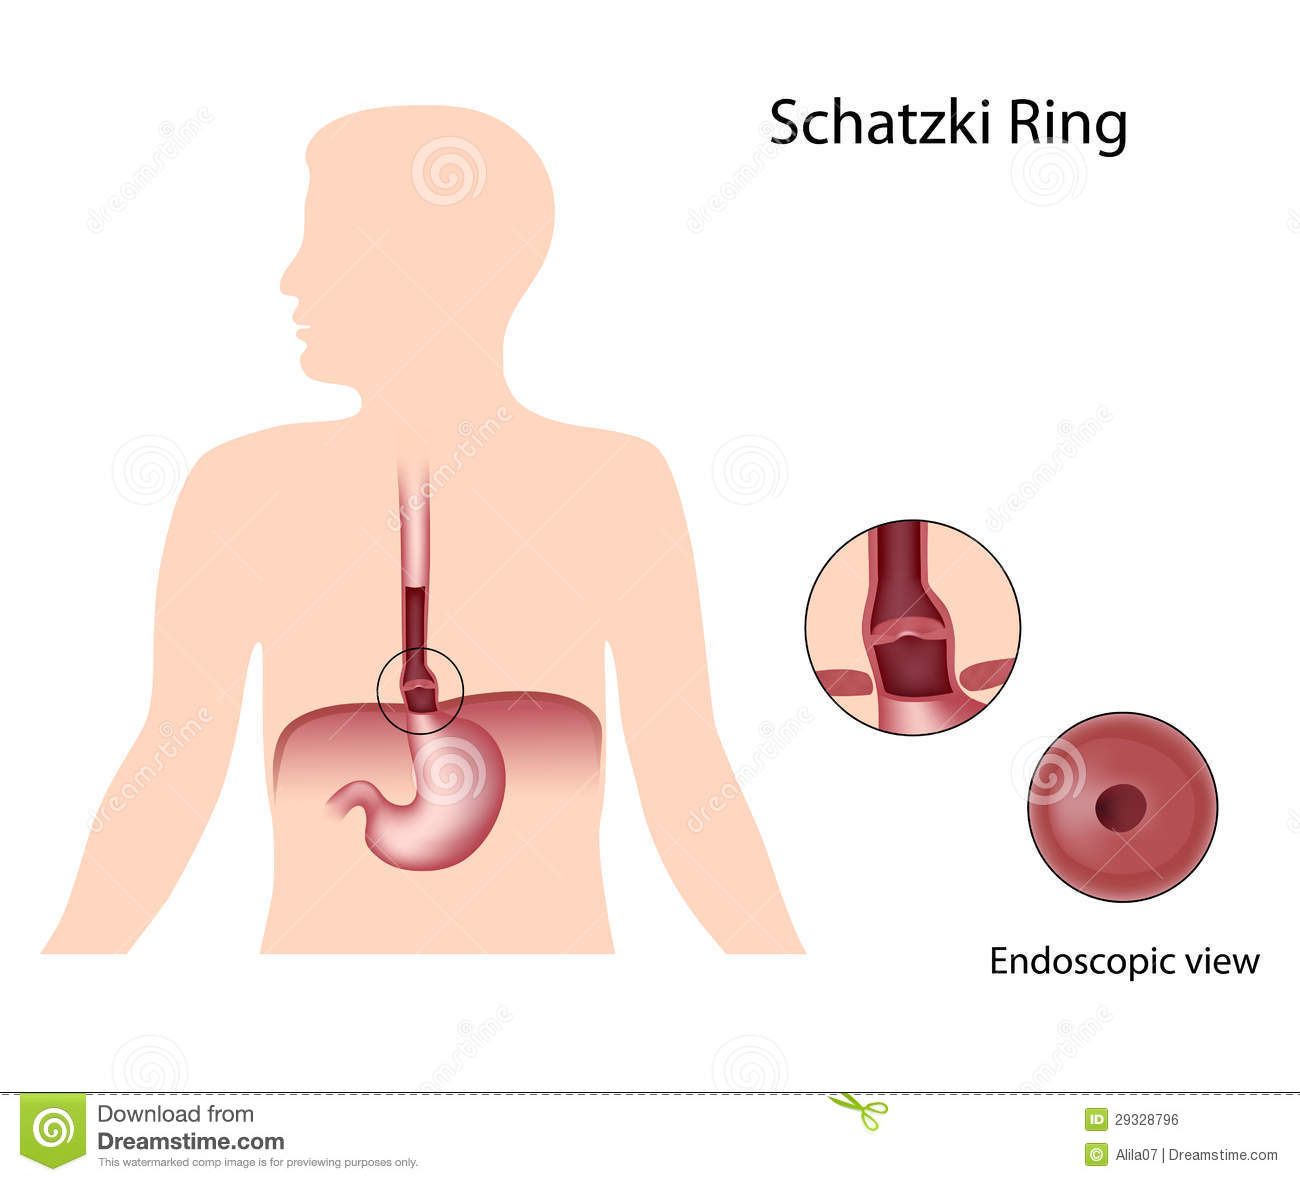 Schatzki Ring Royalty Free Stock Image   Image  29328796